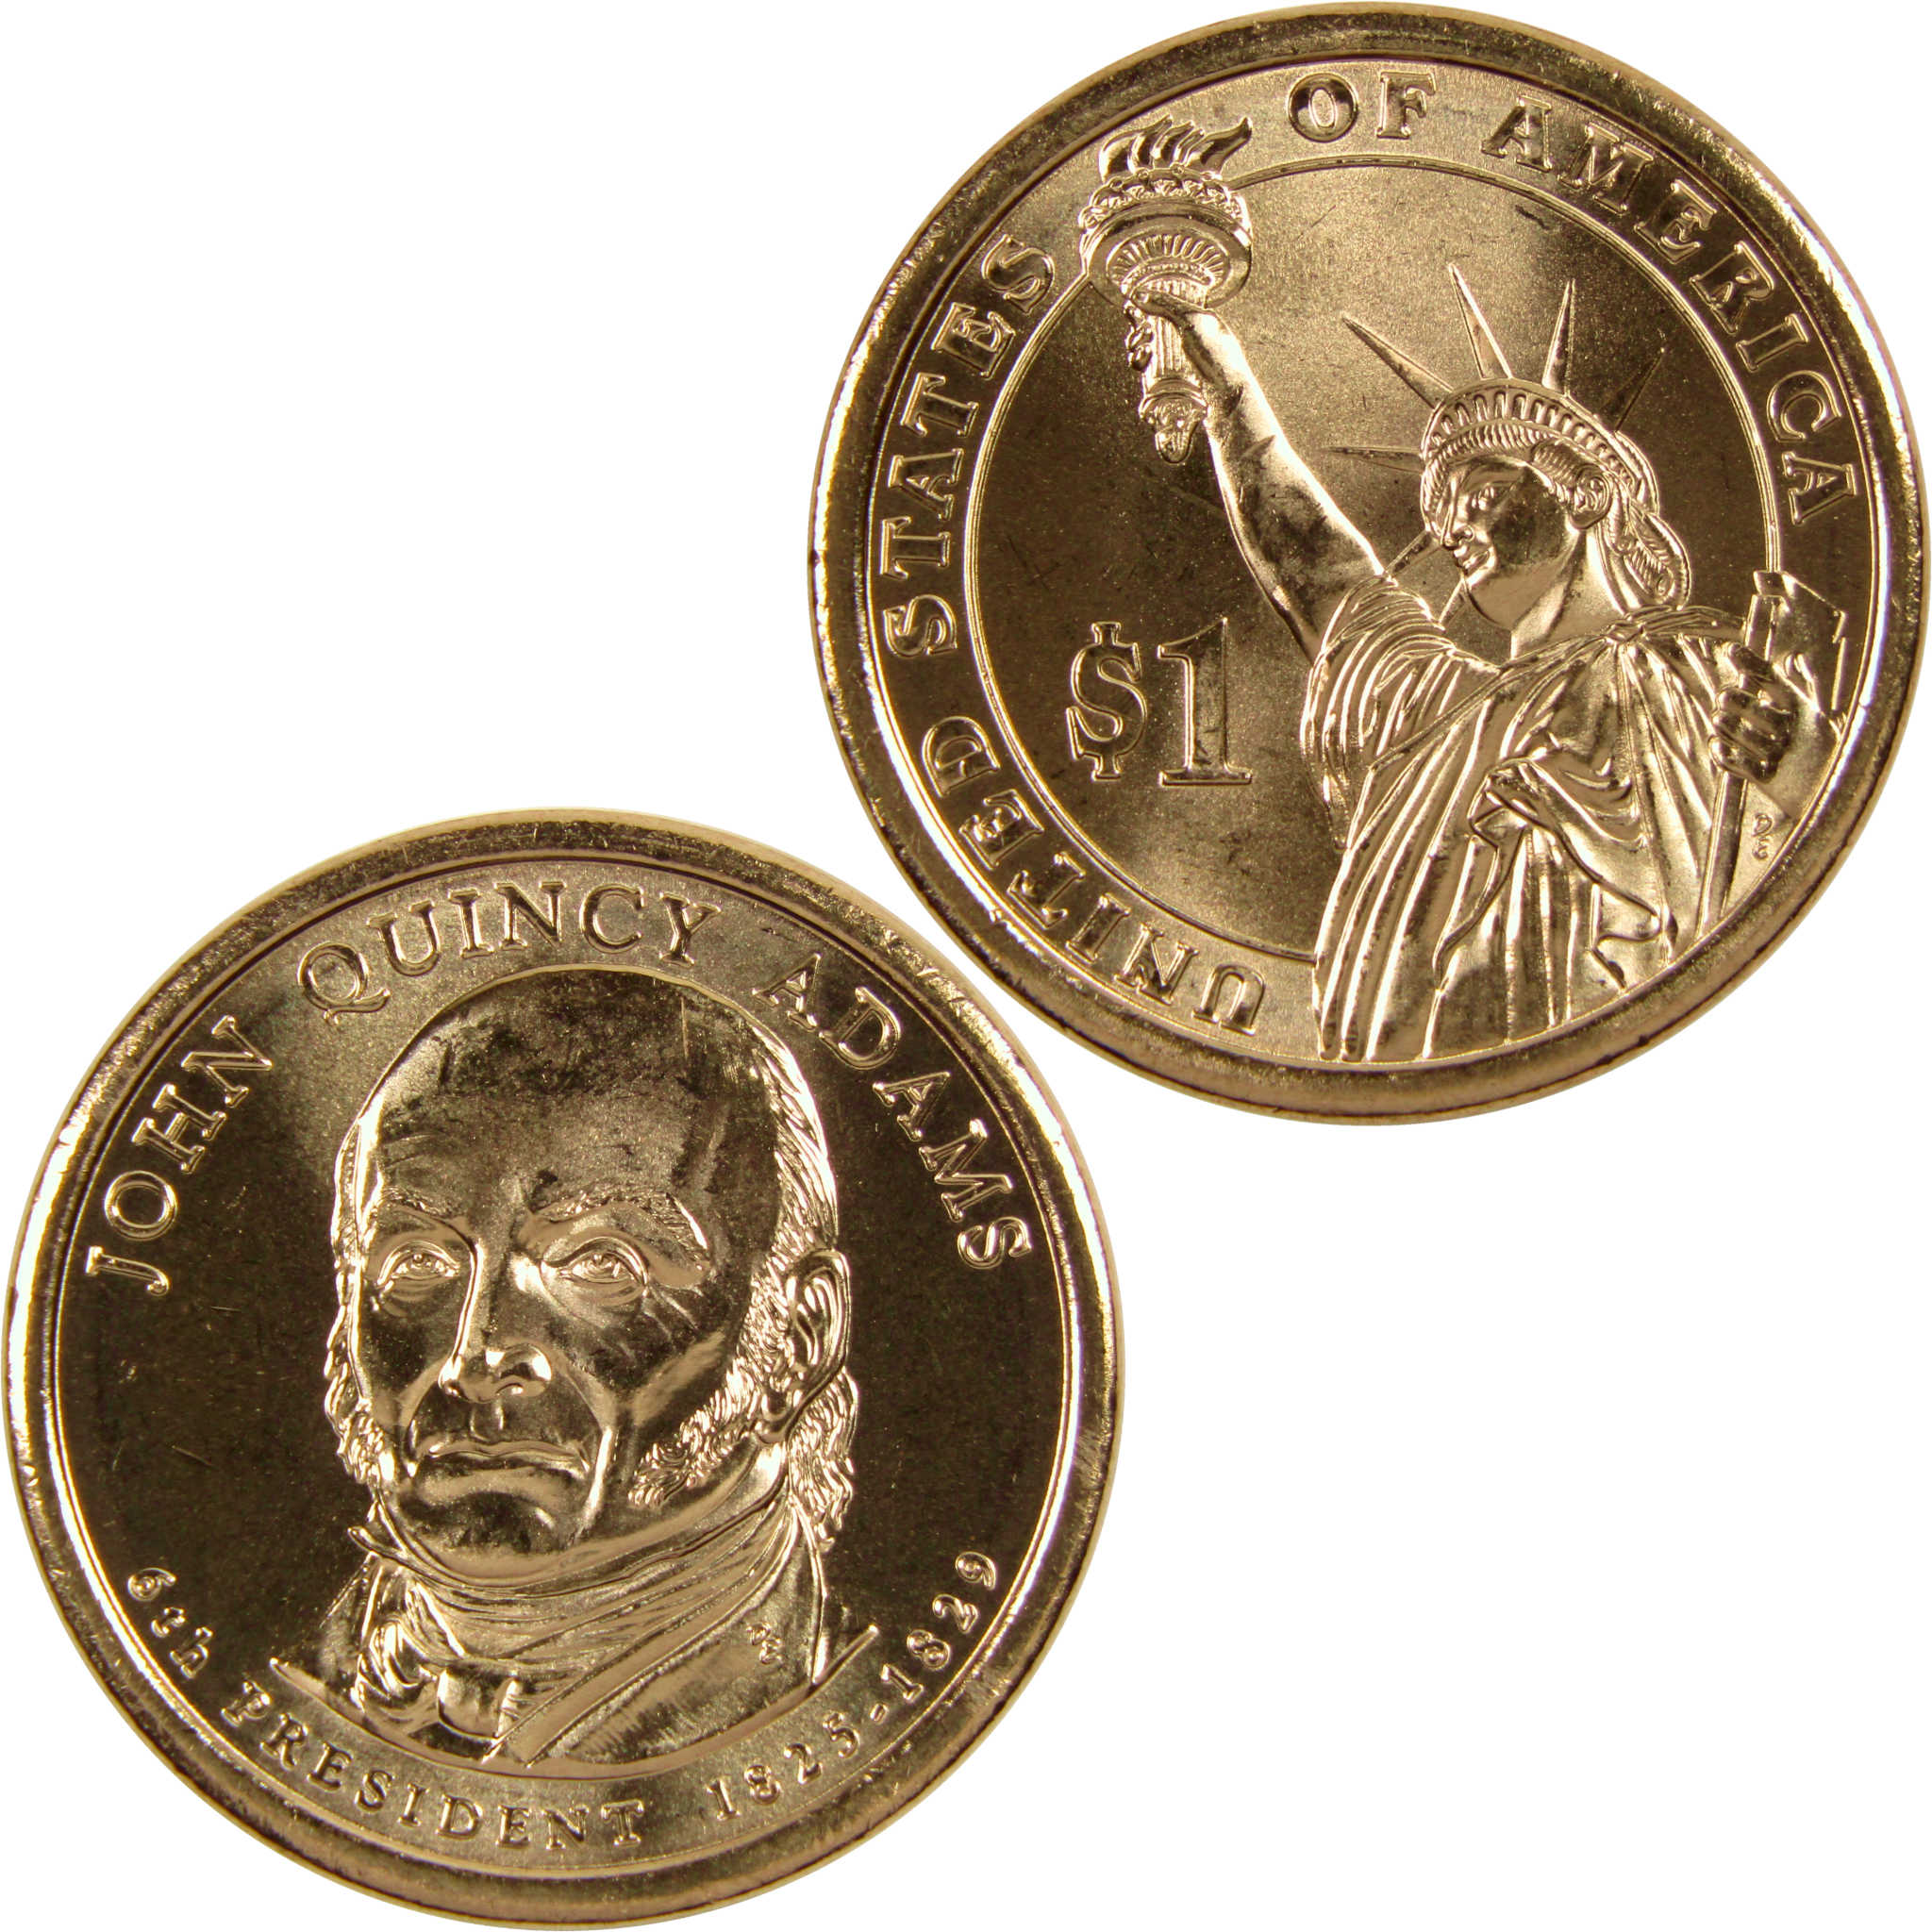 2008 D John Quincy Adams Presidential Dollar BU Uncirculated $1 Coin